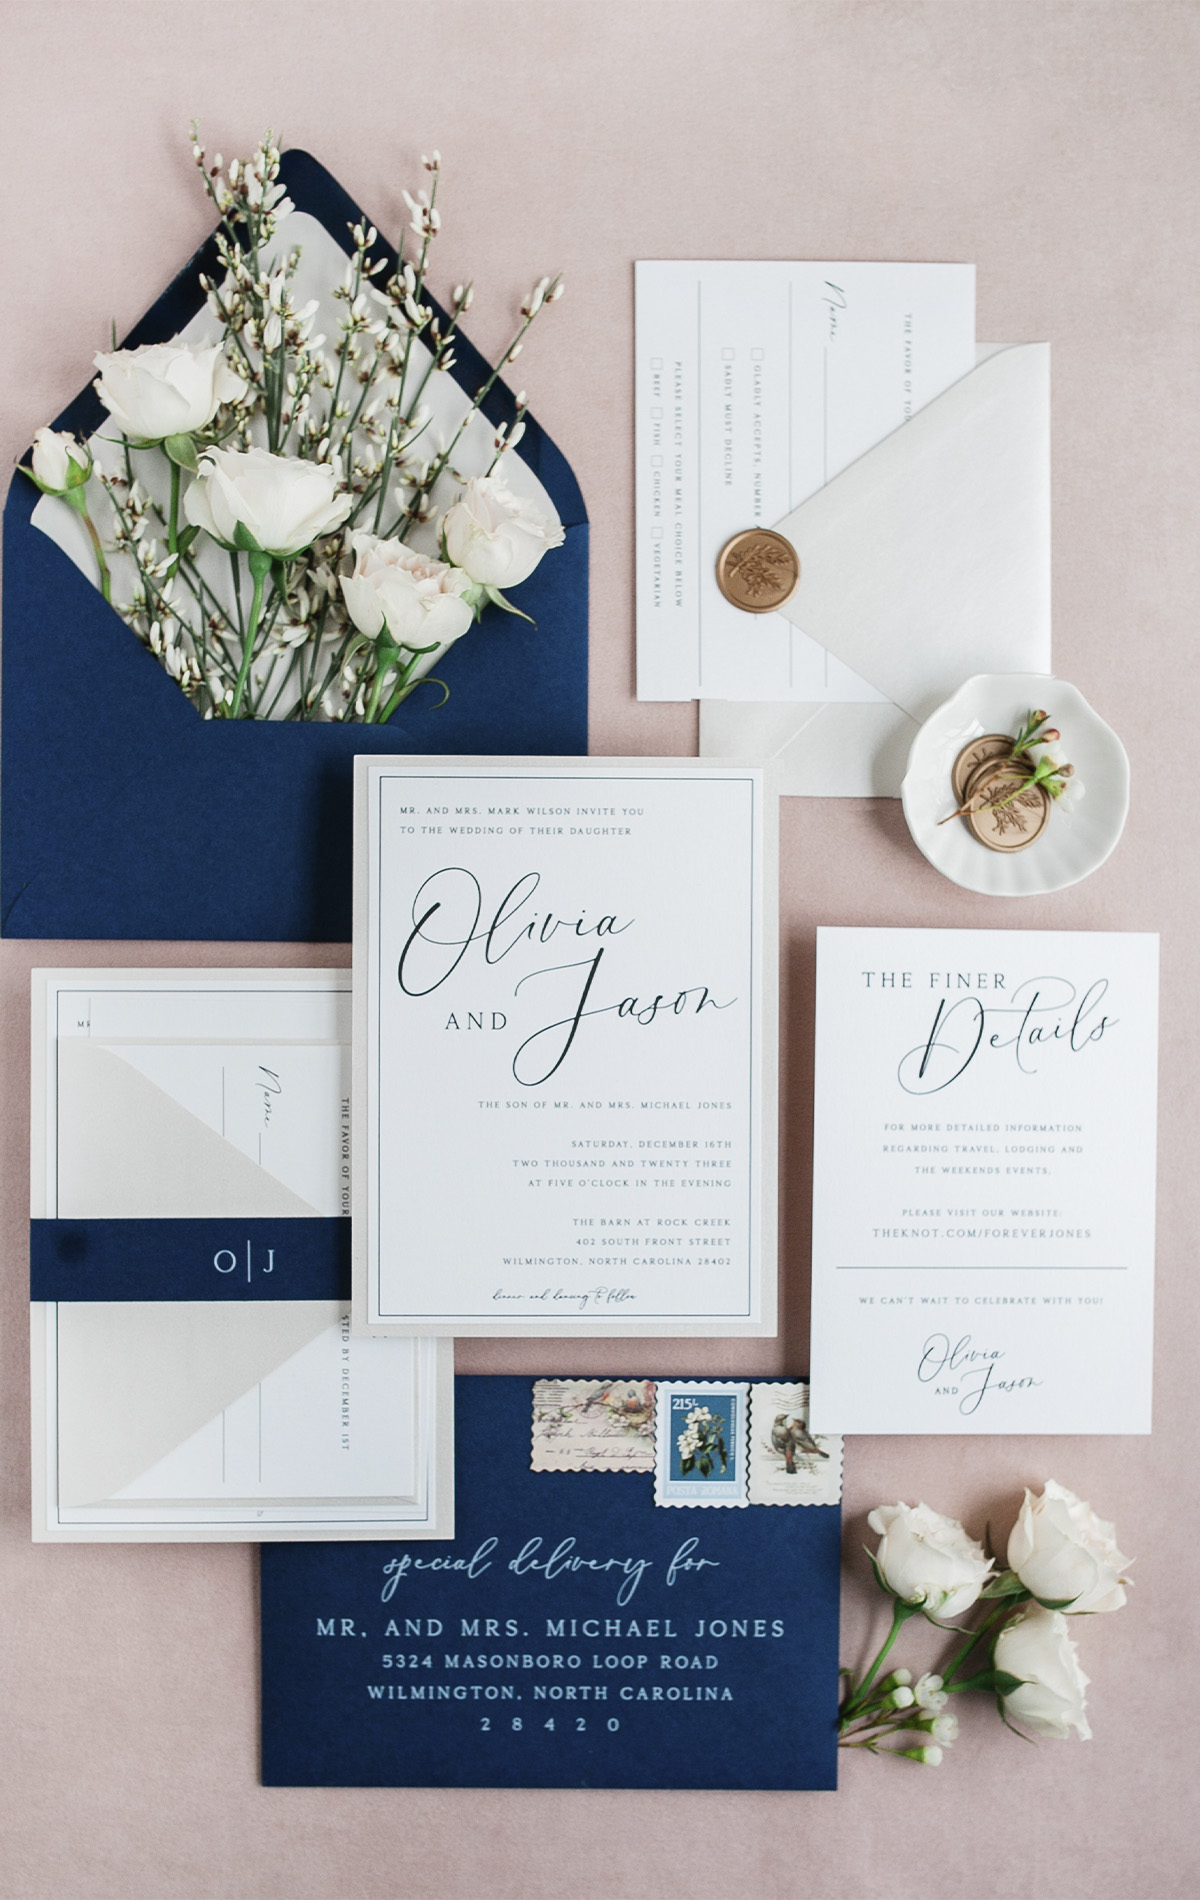 Alexis Scott - Home Website Slider Image - White and navy wedding invitations